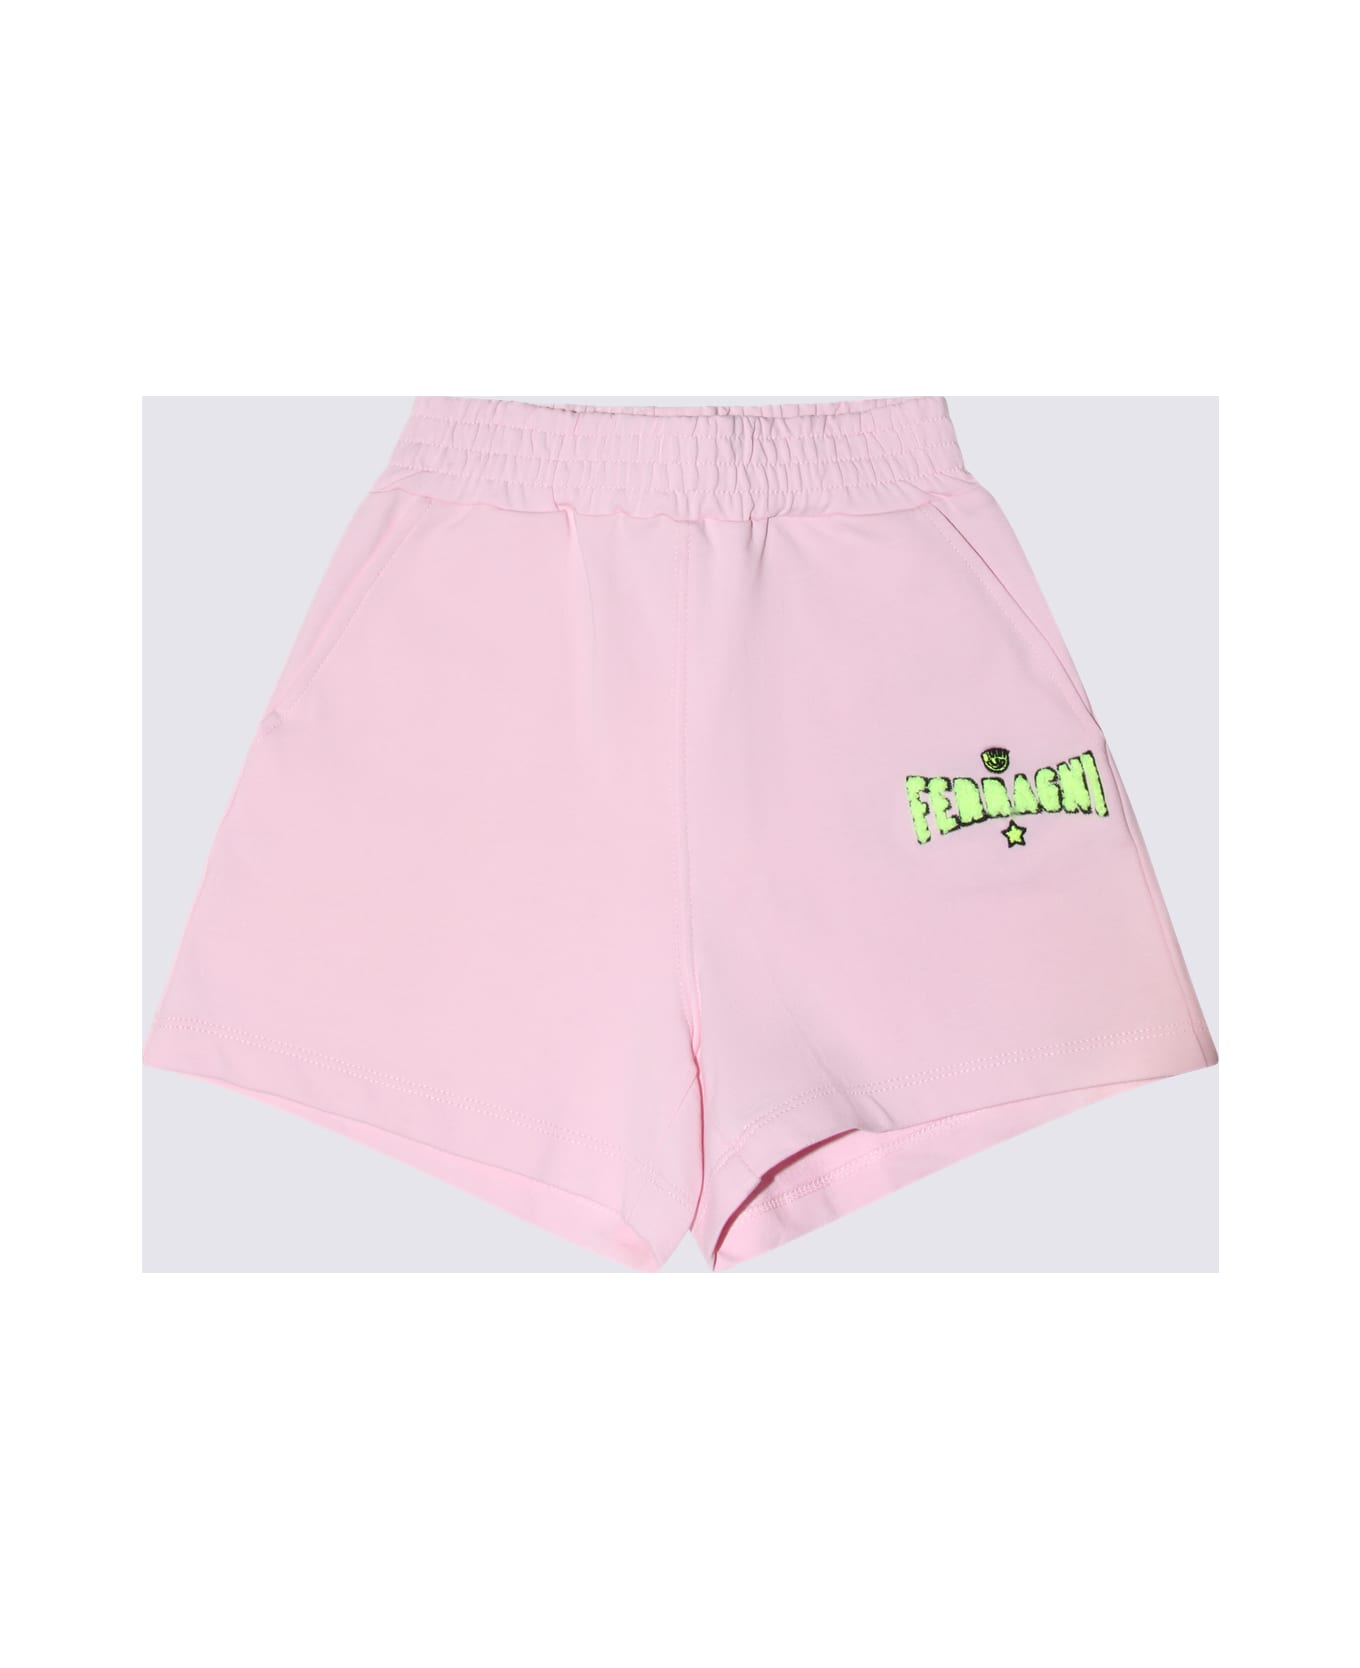 Chiara Ferragni Pink Fairytale Cotton Shorts - ROSA FAIRYTALE